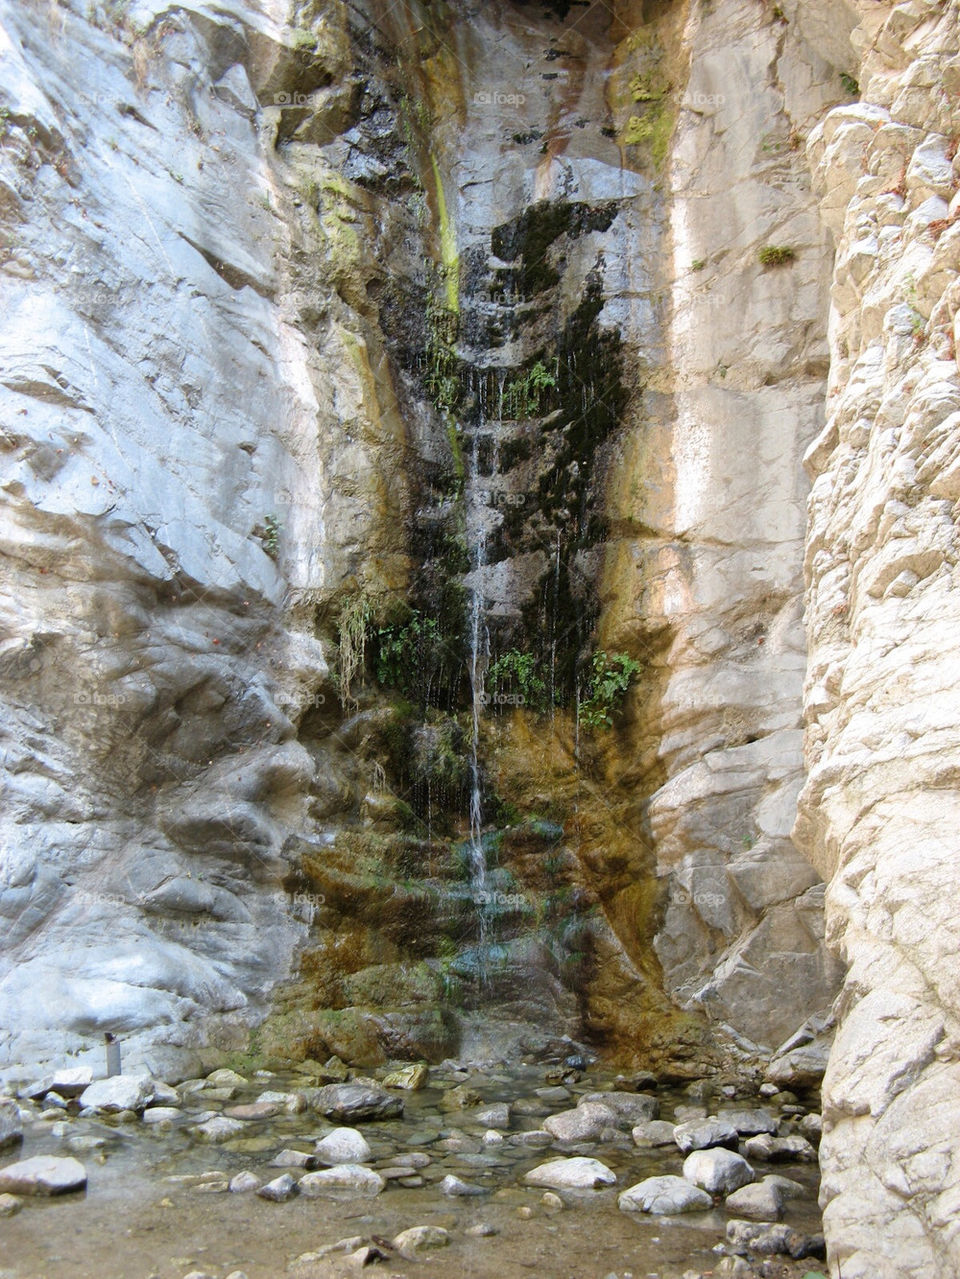 Trickling waterfall